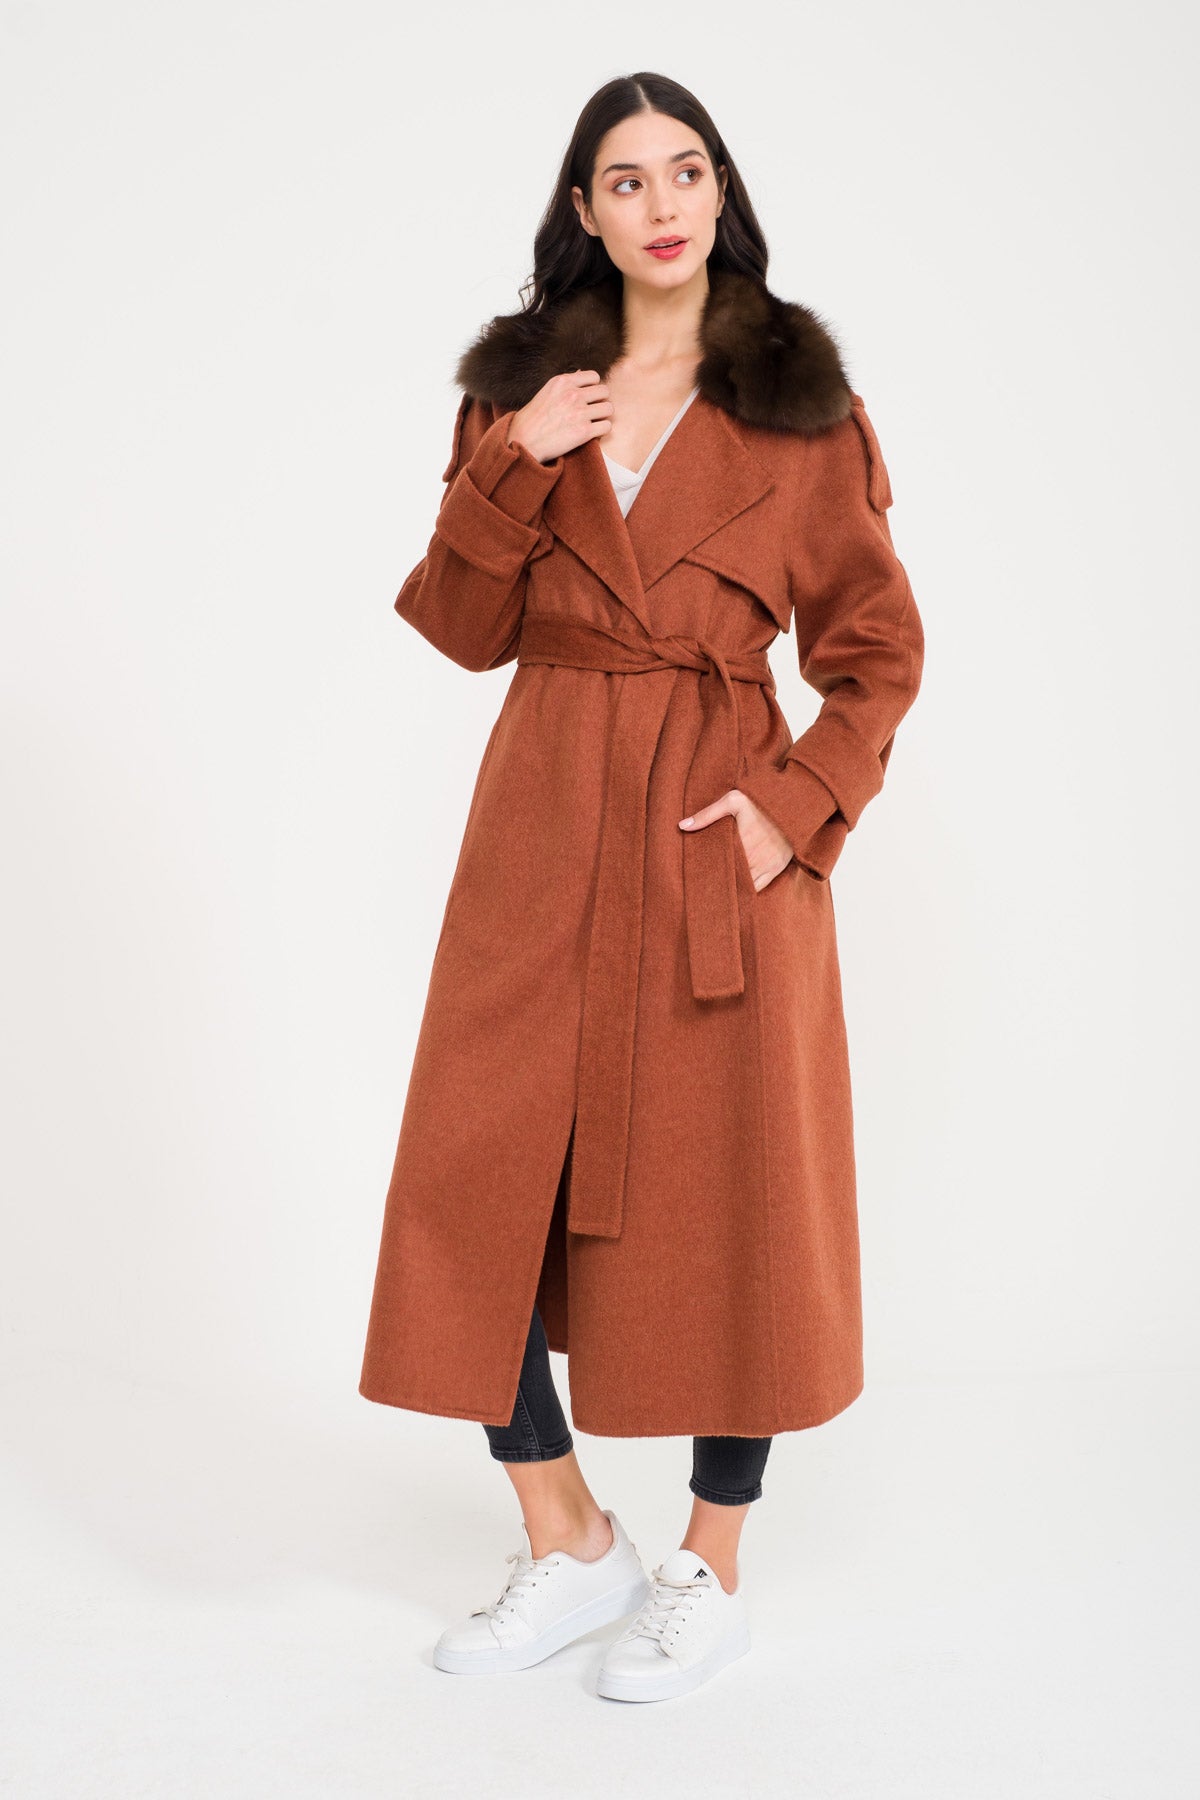 Tile Red Wool Long Coat